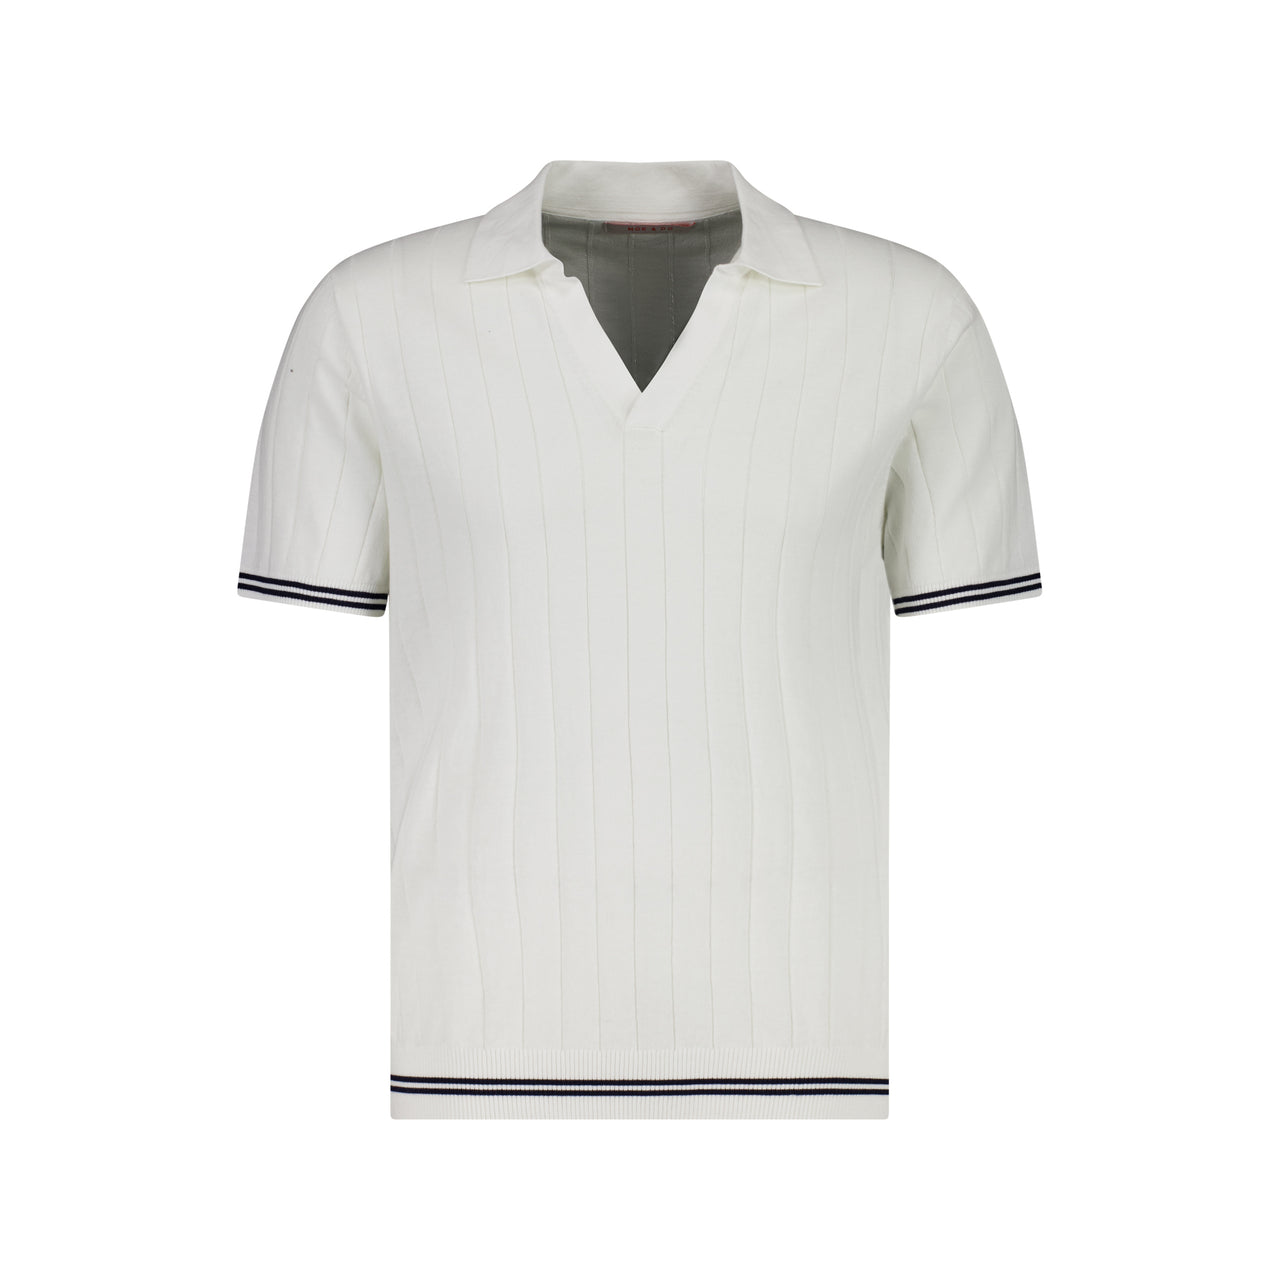 MCKINNON Skipper Neck Short Sleeve Shirt WHITE/NAVY